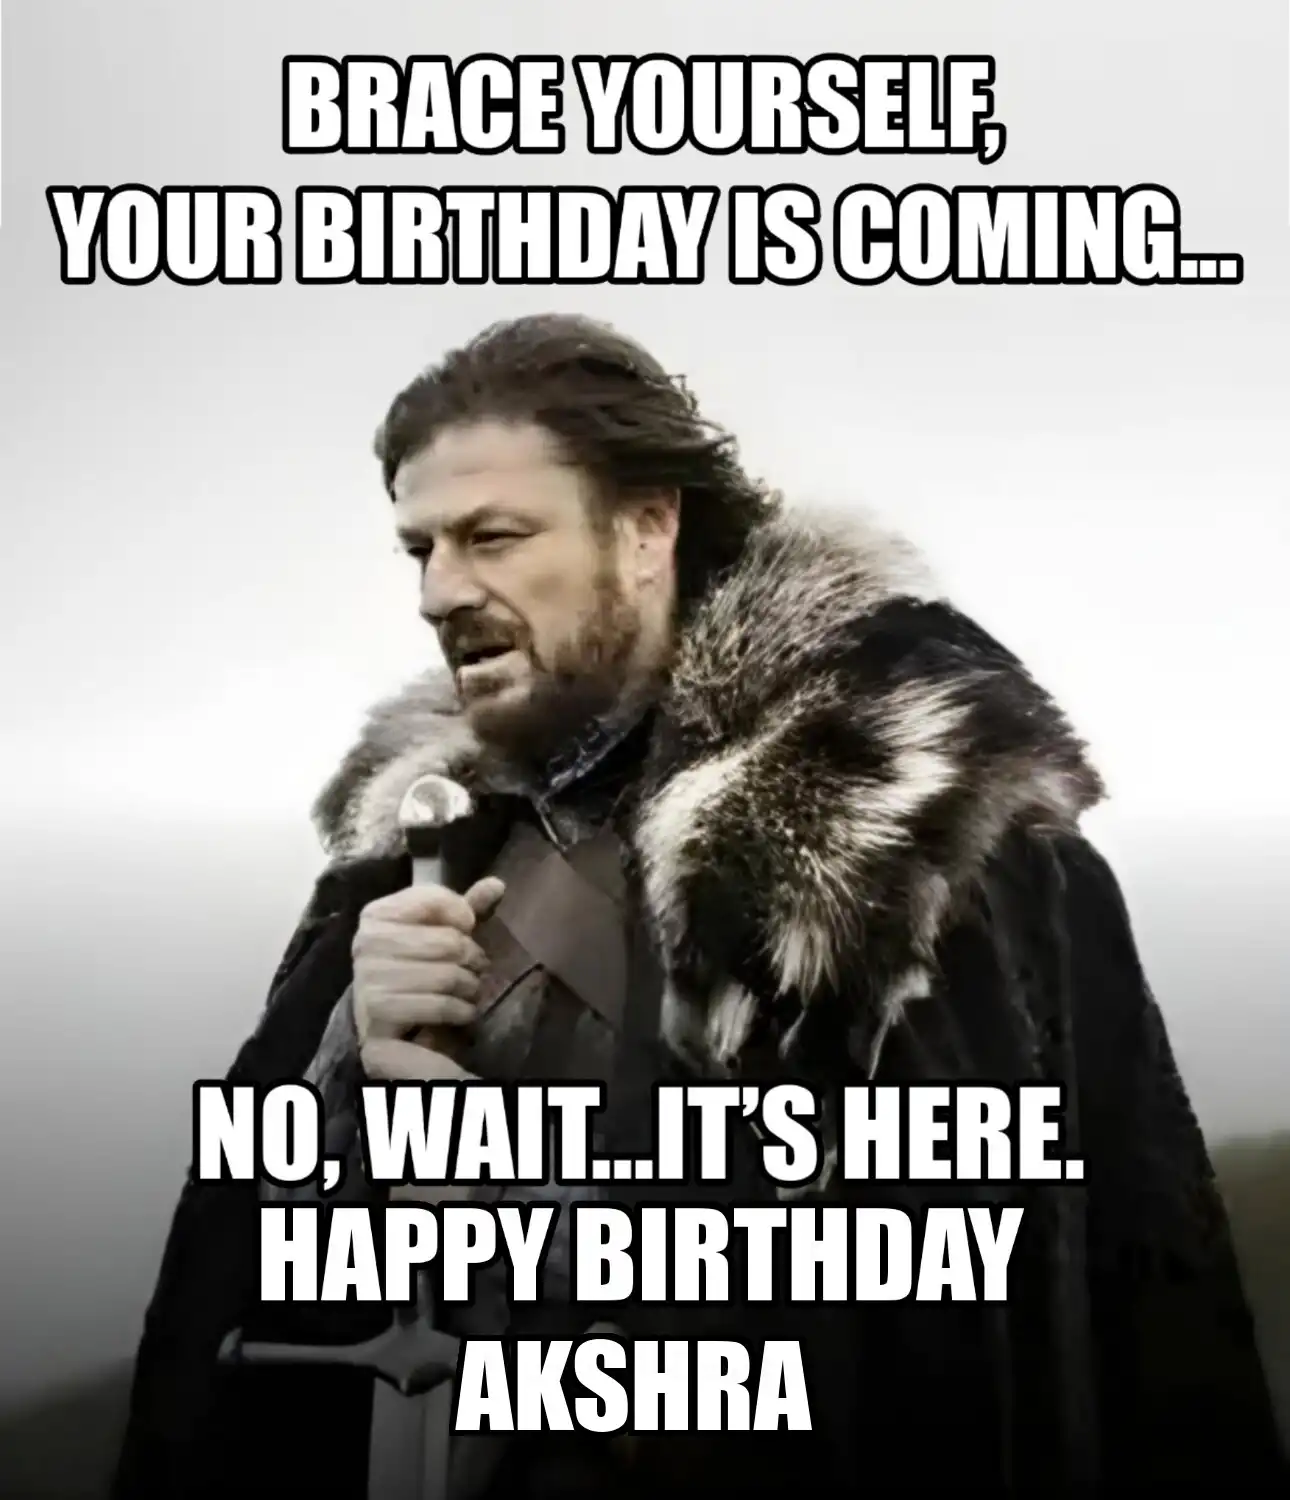 Happy Birthday Akshra Brace Yourself Your Birthday Is Coming Meme